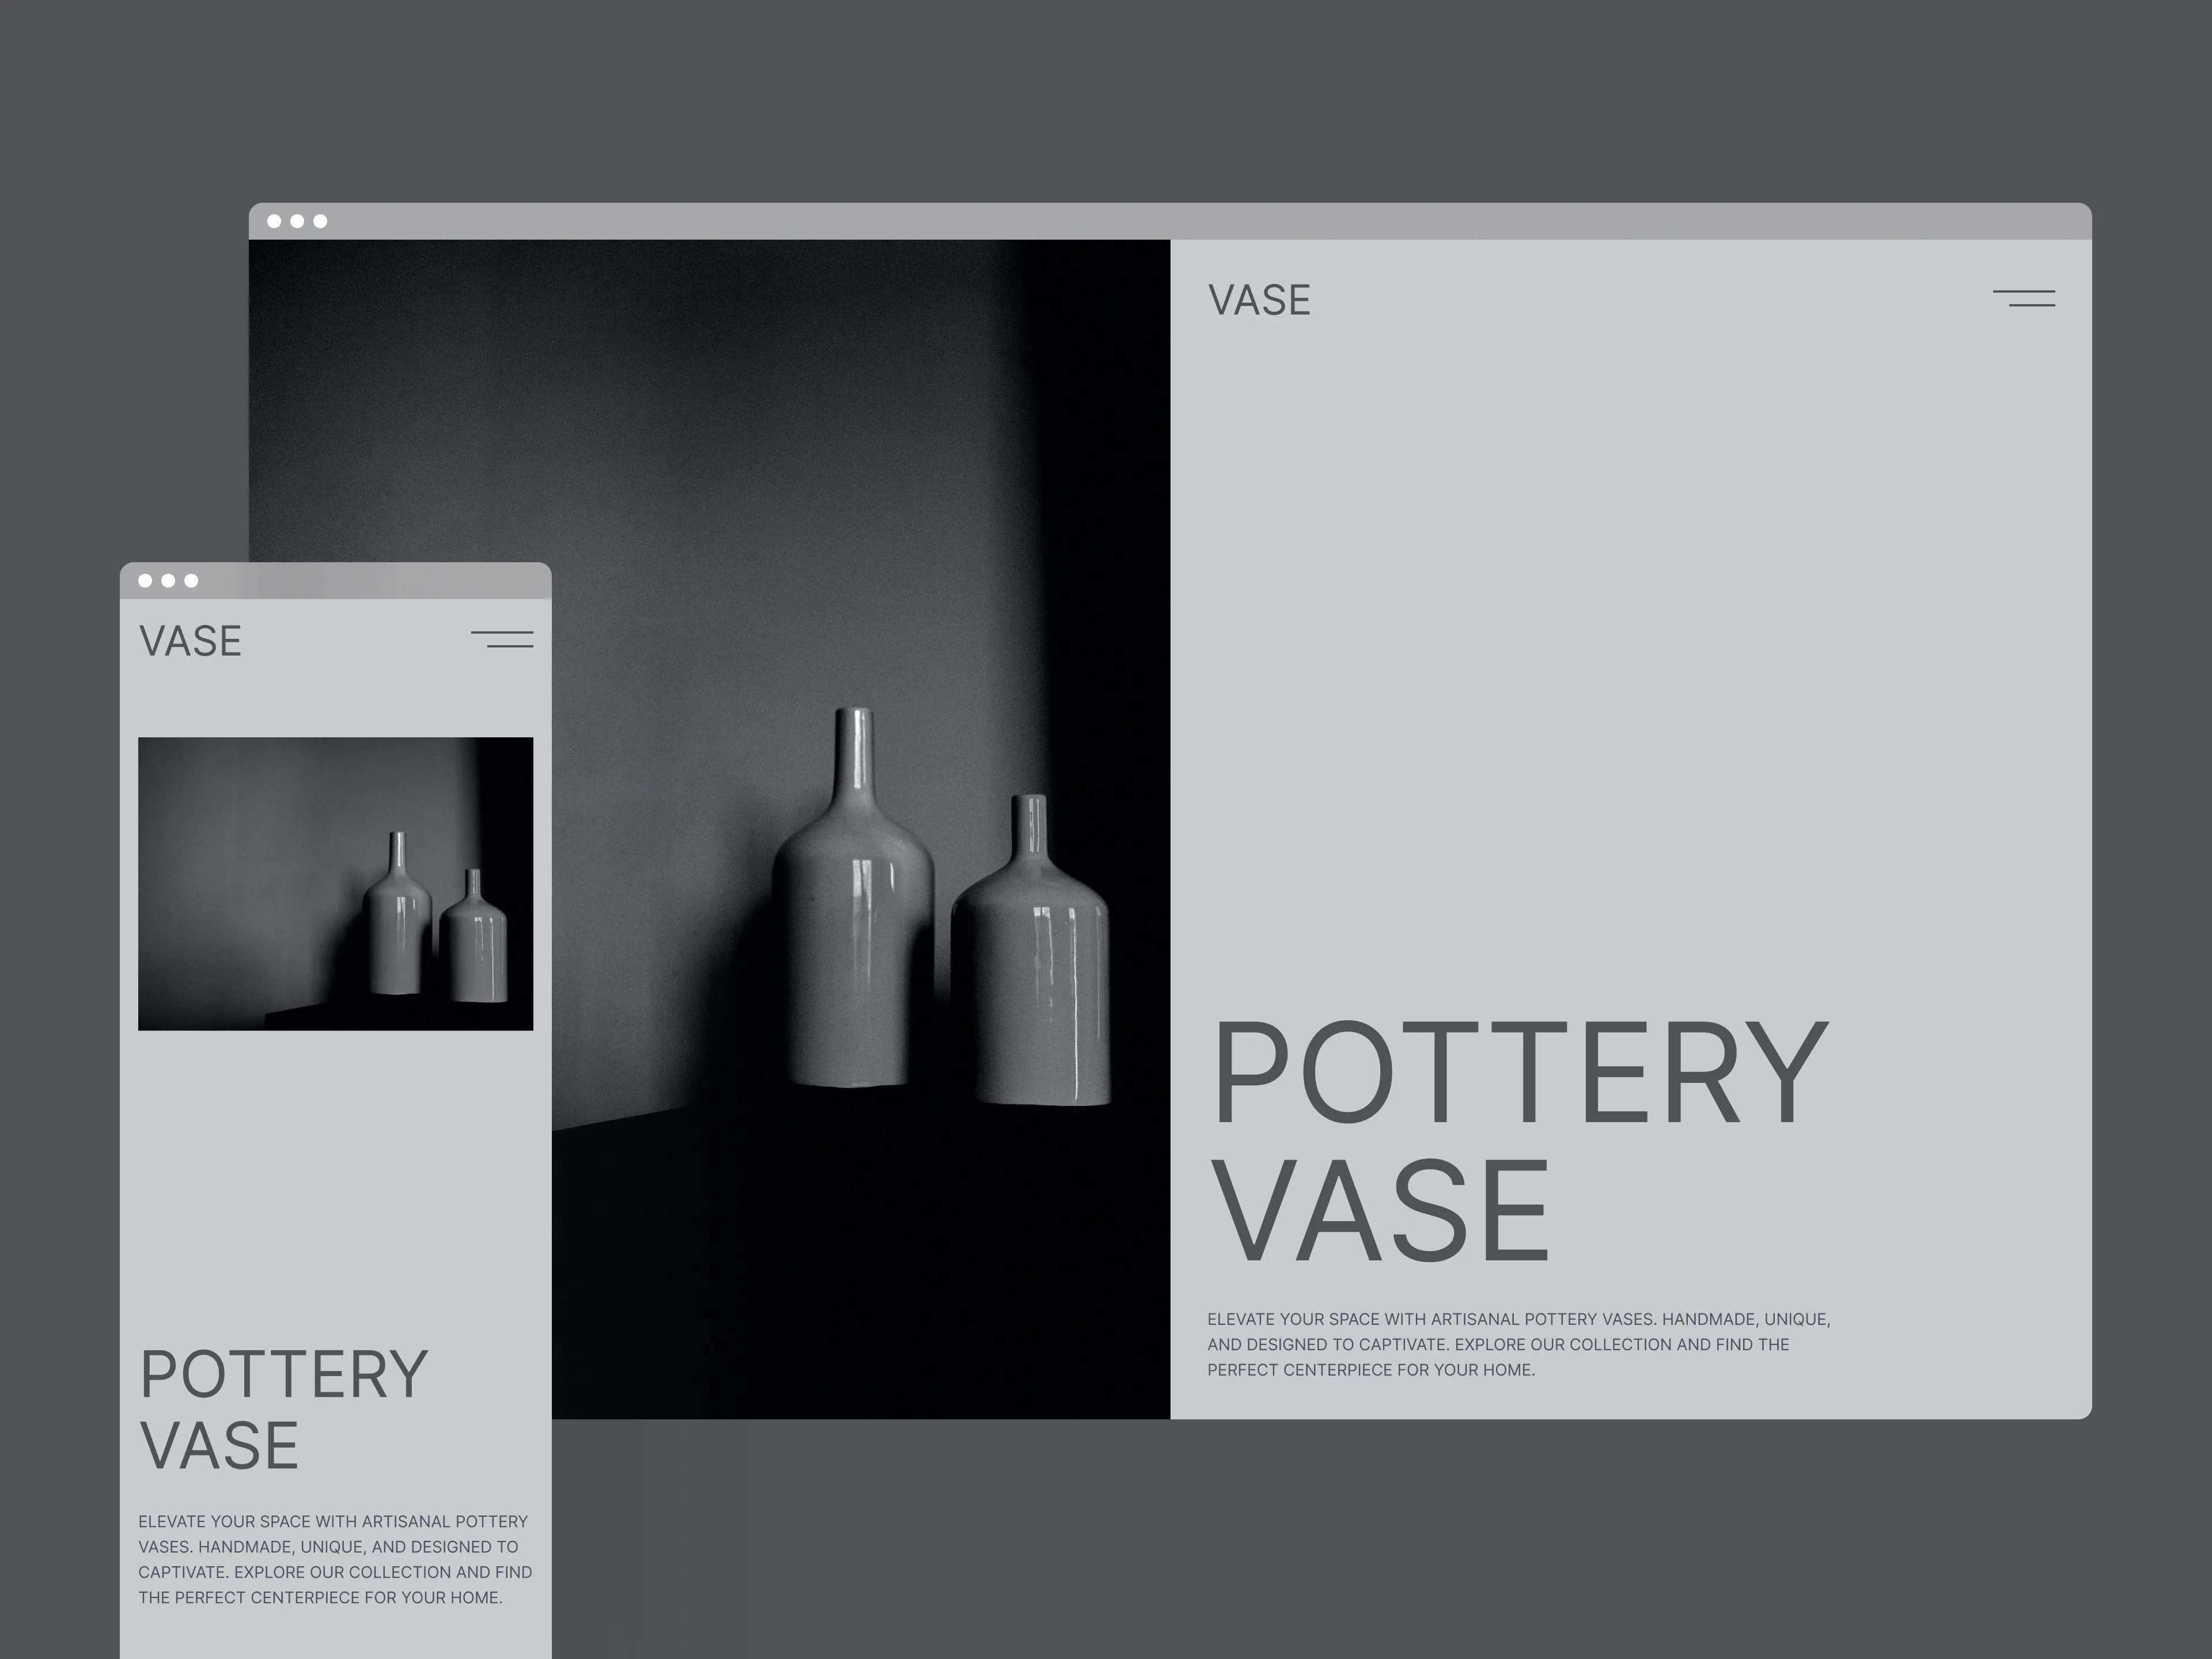 Pottery vase concept design exploration hero header